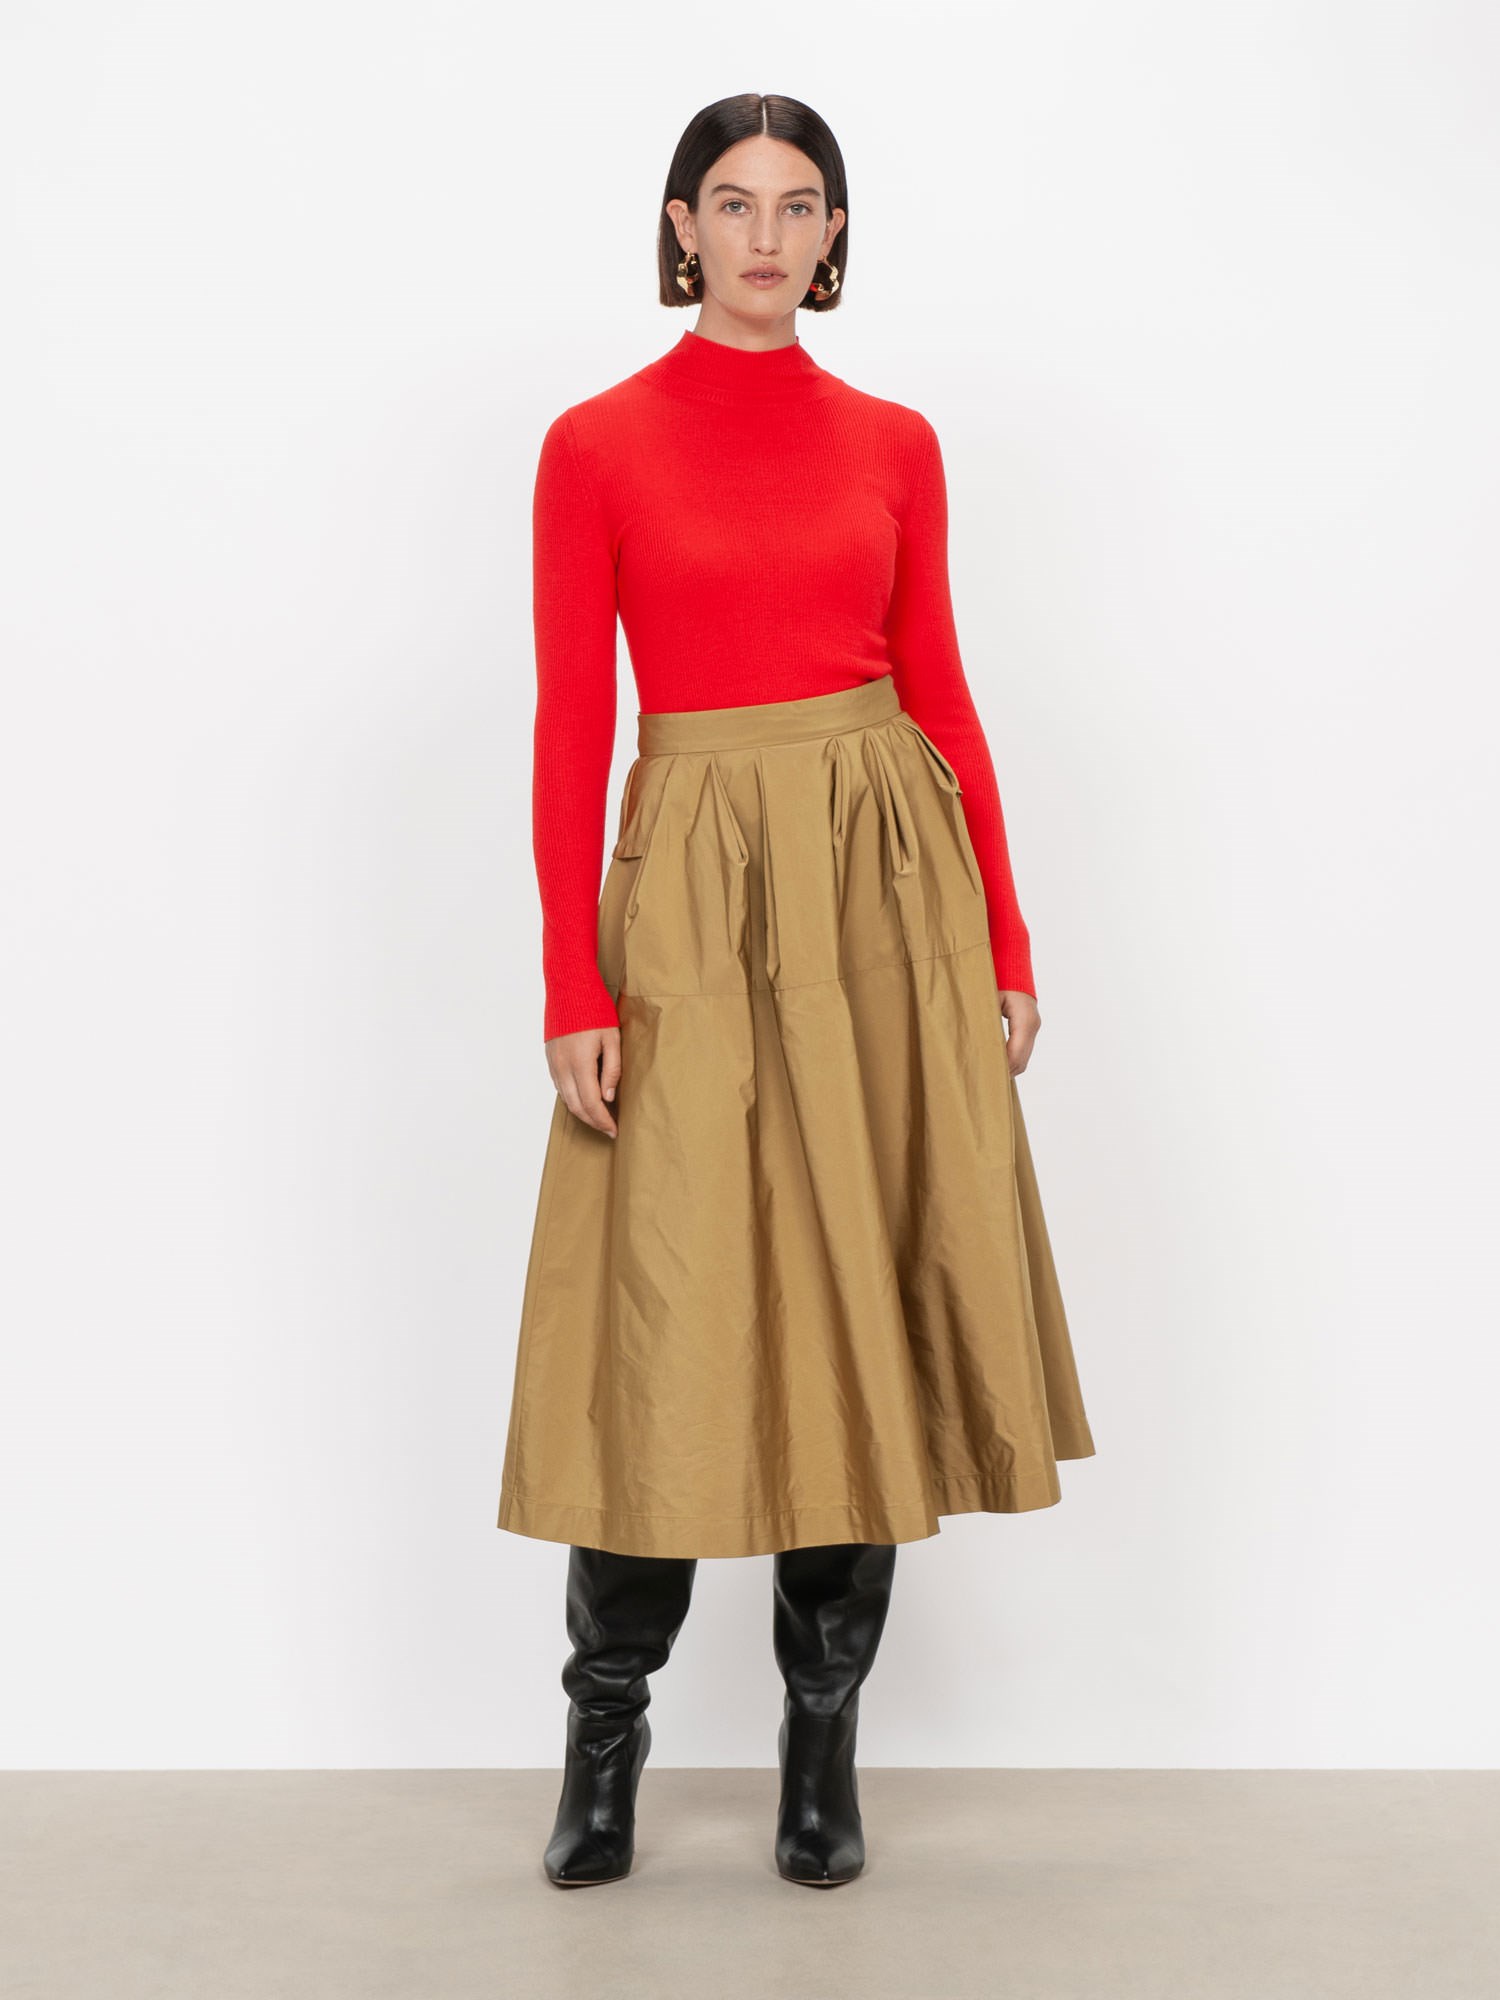 Tech Taffeta Skirt | Buy Skirts Online - Veronika Maine